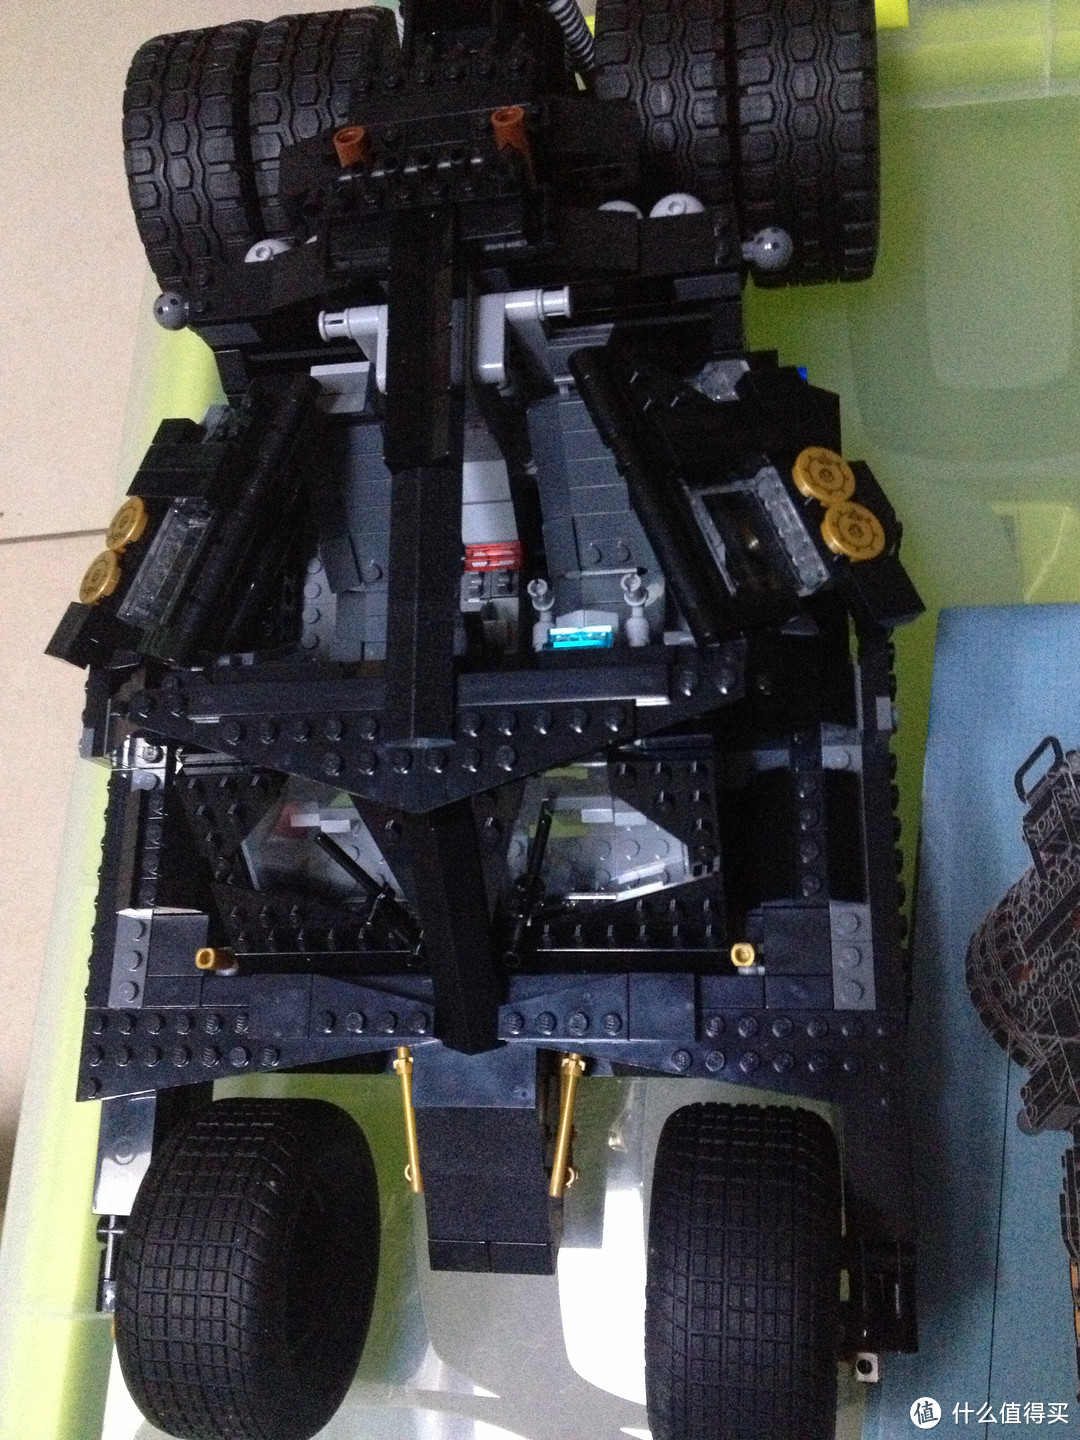 LEGO 乐高 超级英雄系列 The Tumbler 蝙蝠侠 蝙蝠战车 76023